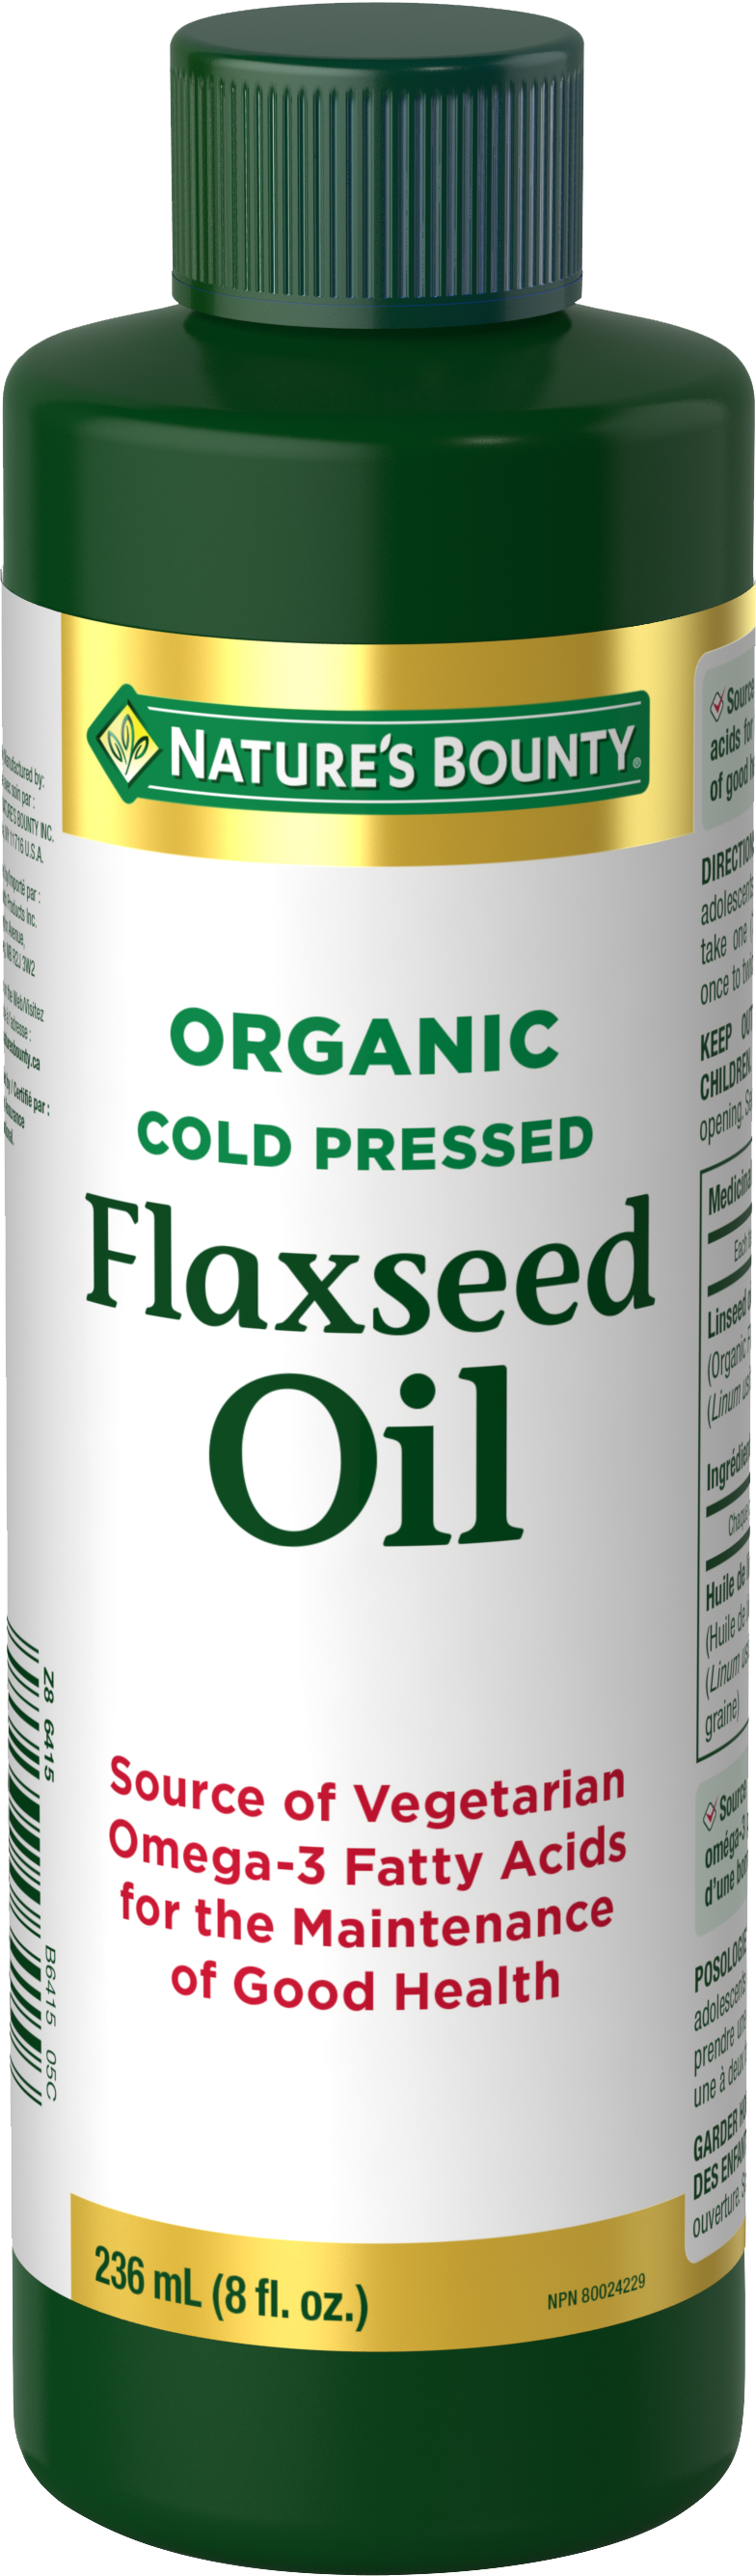 Flaxseed Oil Organic